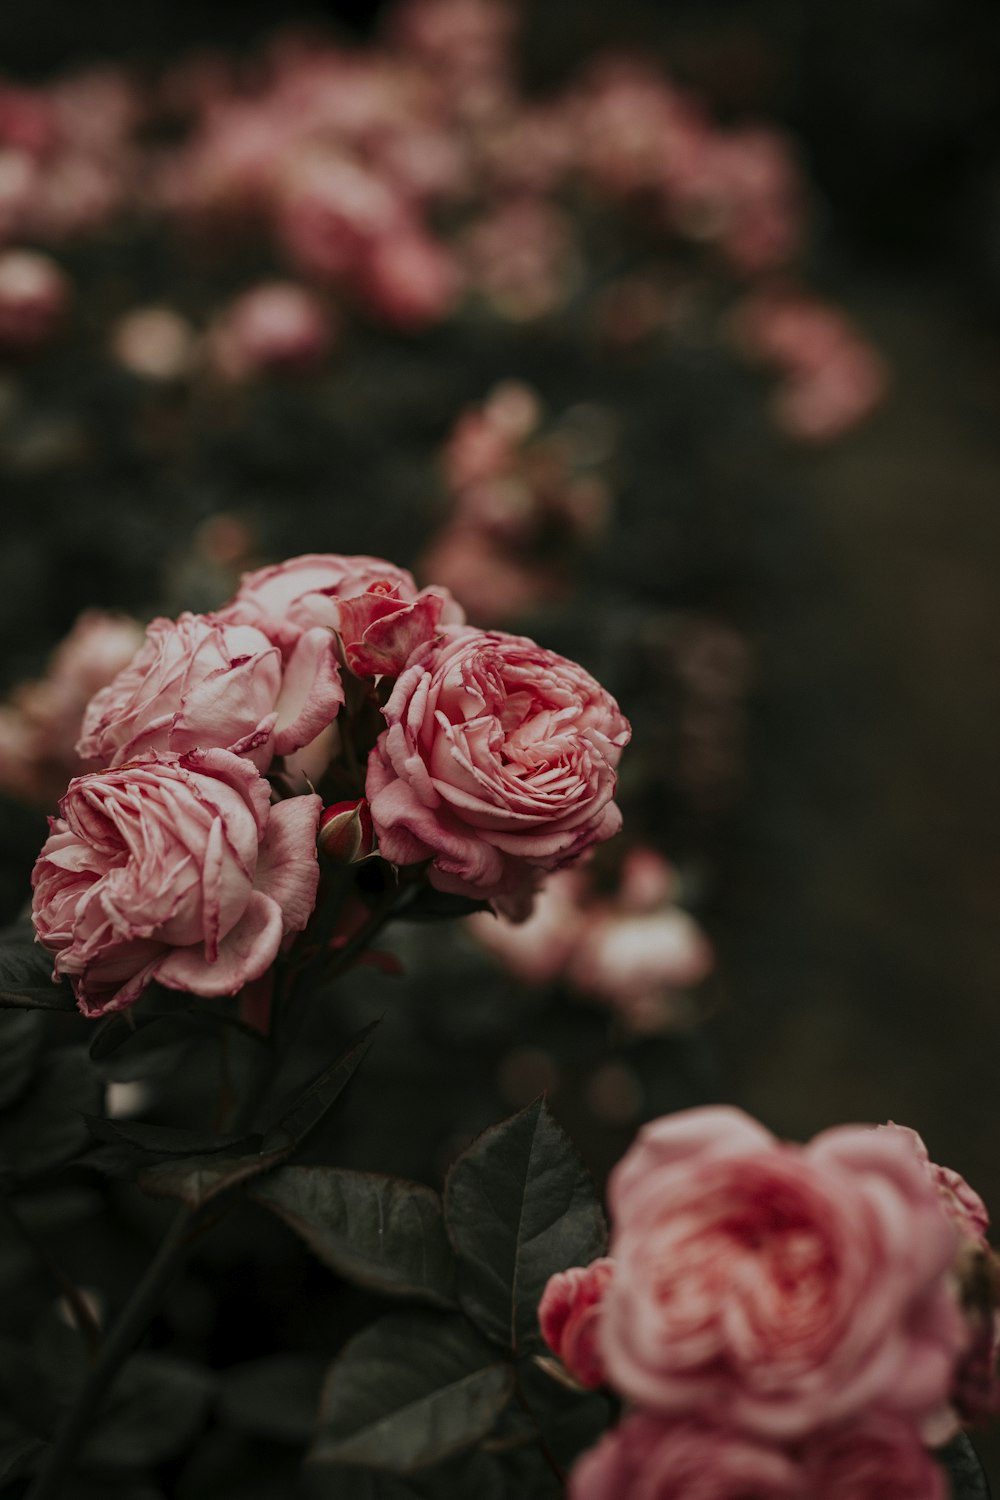 Selektive Fokusfotografie von rosa Blütenblättern